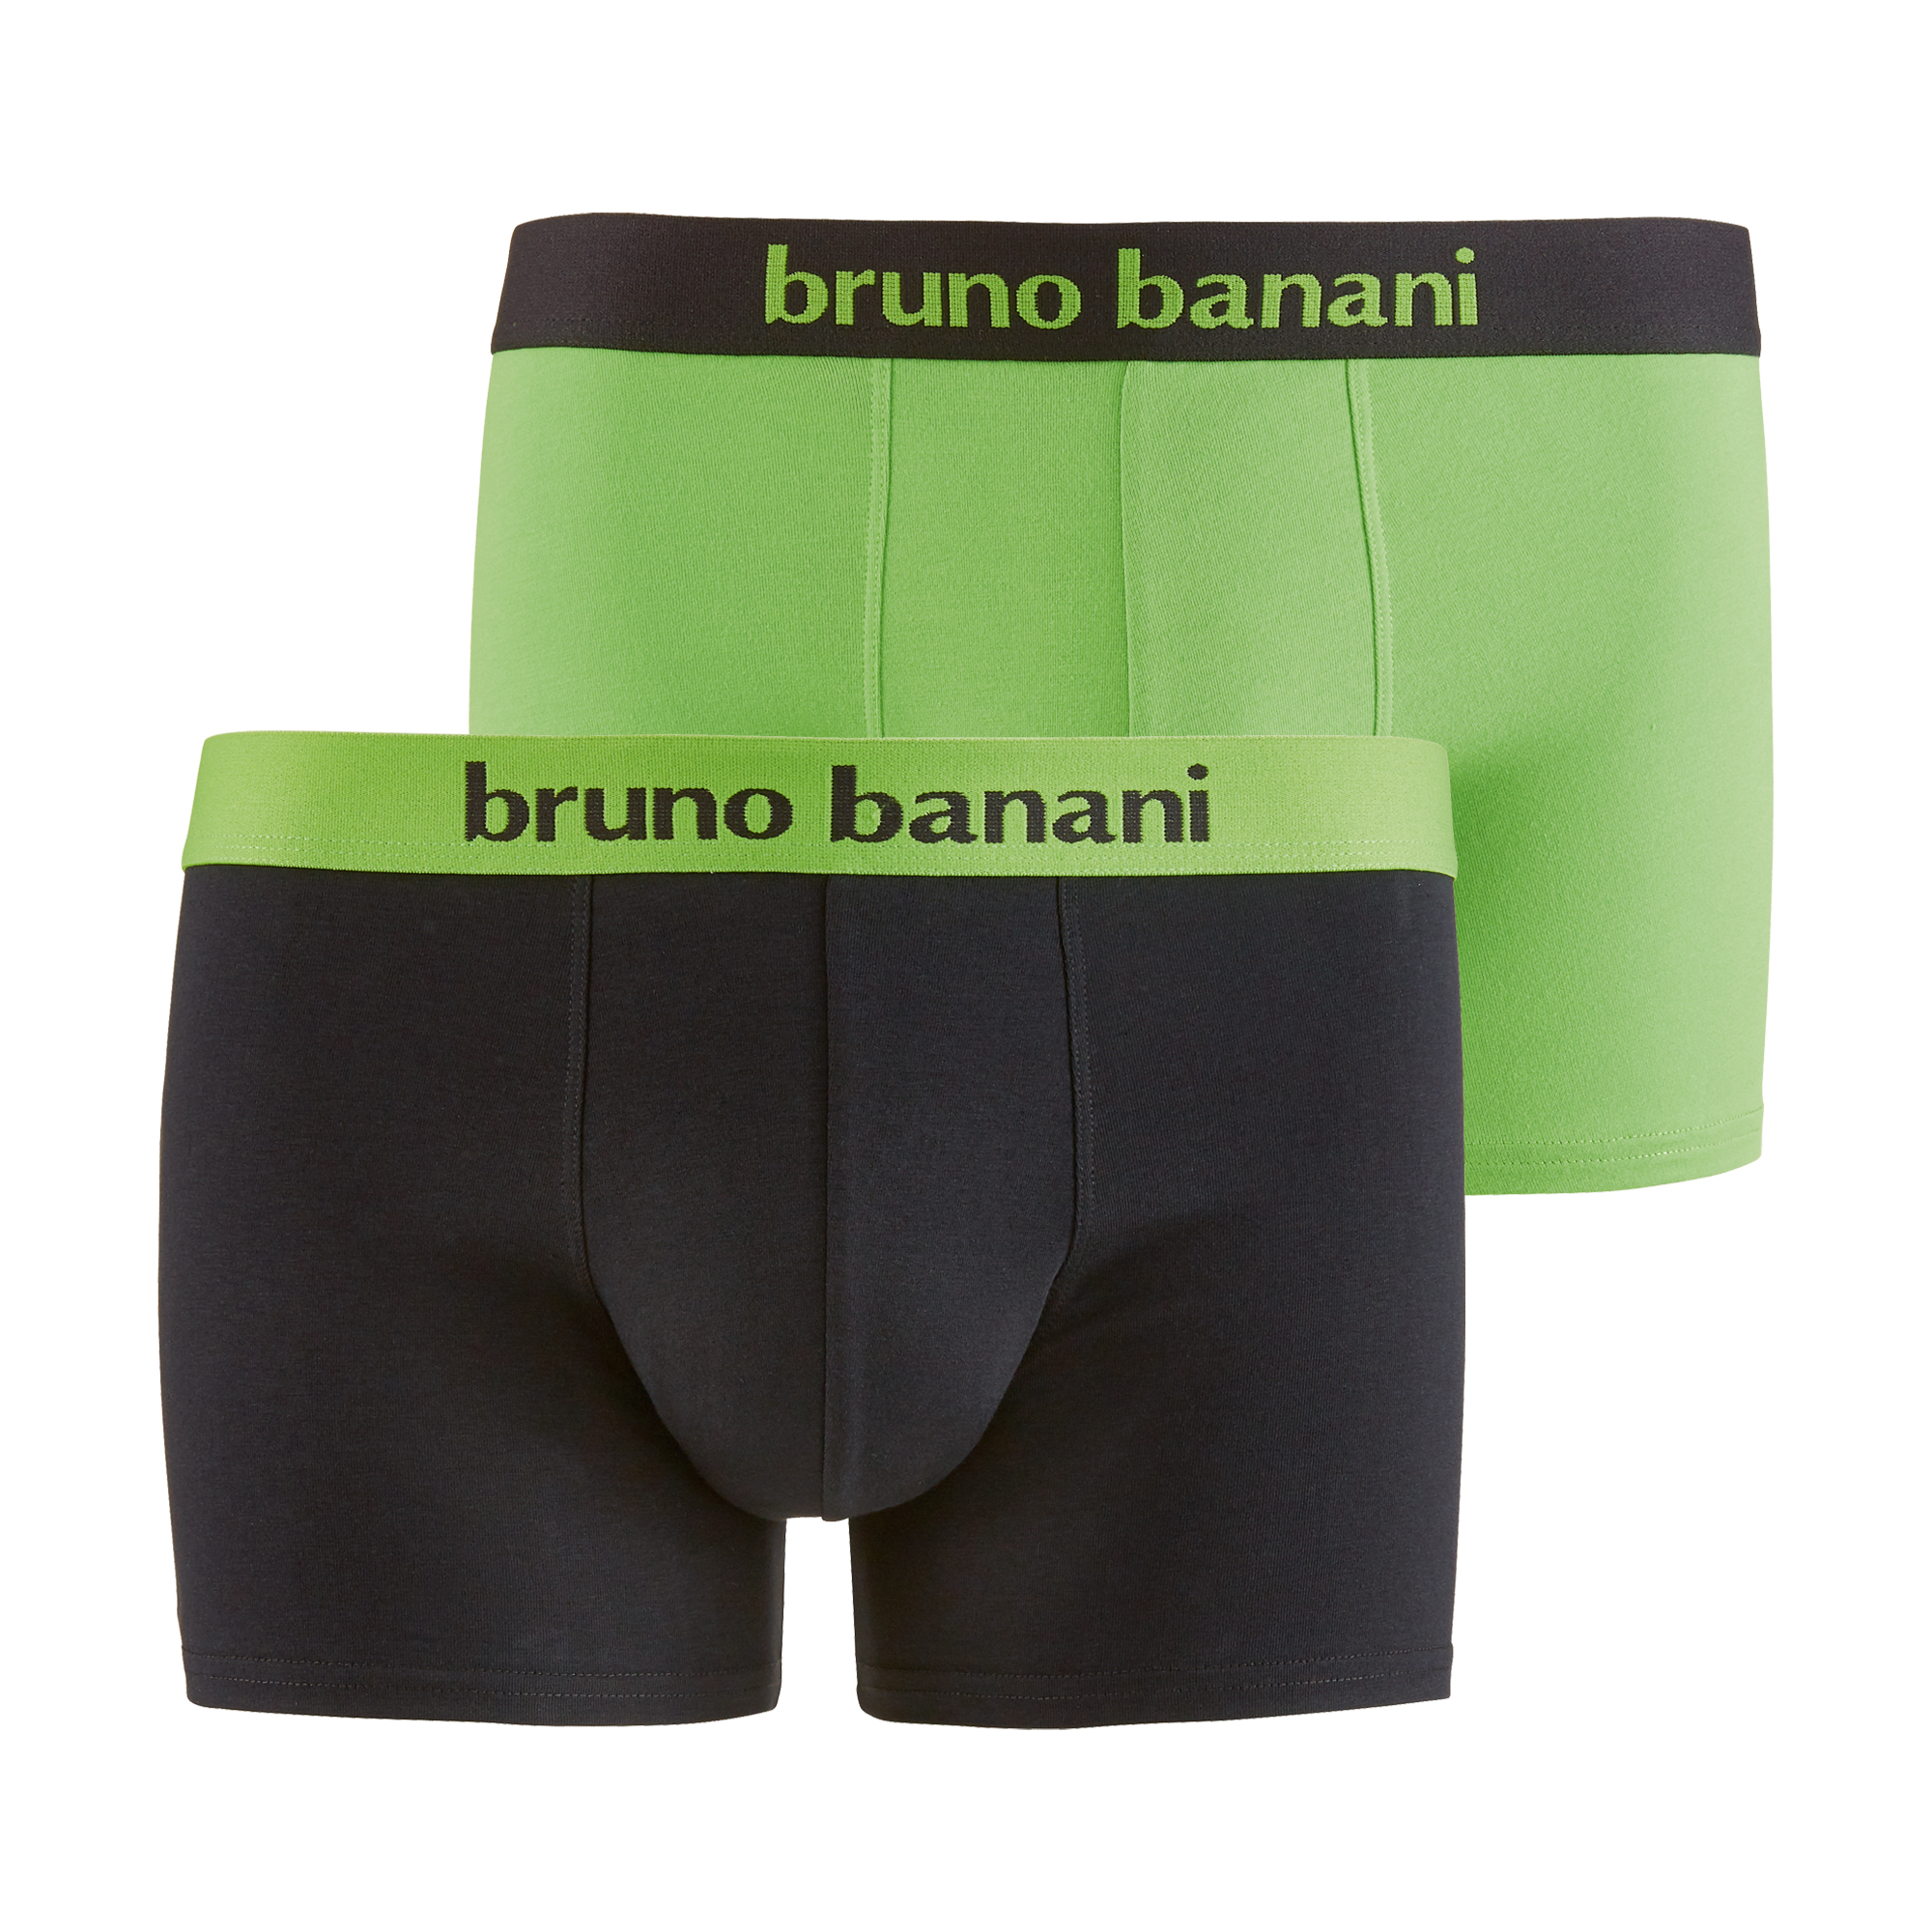 Bruno Banani Herren Boxershorts 2er Pack Streamer Baumwoll Stretch Farbwahl